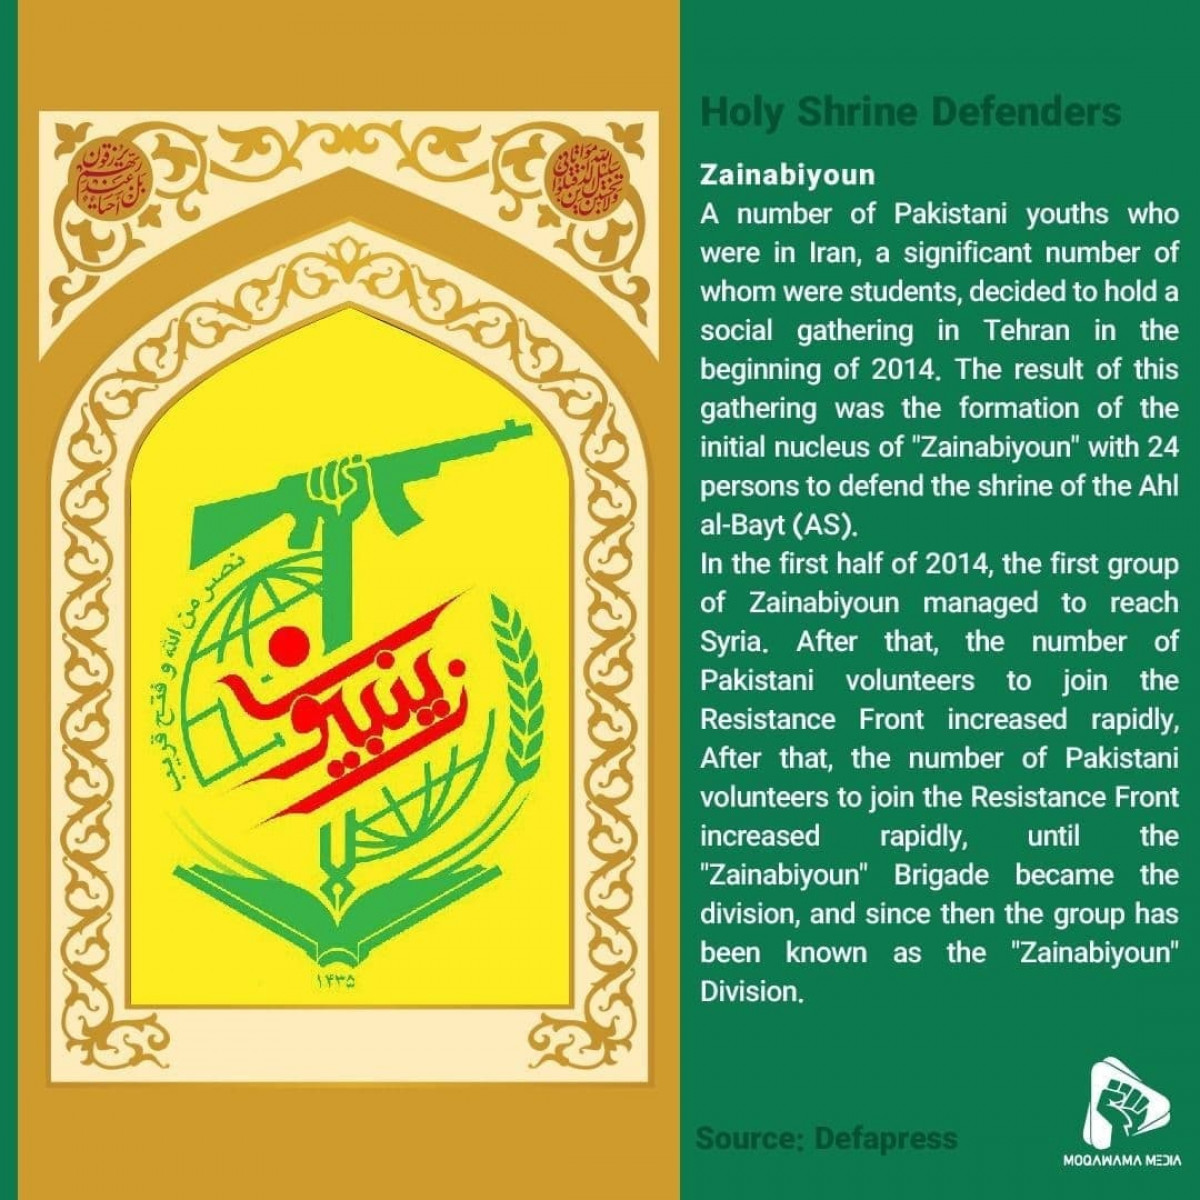 Holy Shrine Defenders: Zainabiyoun